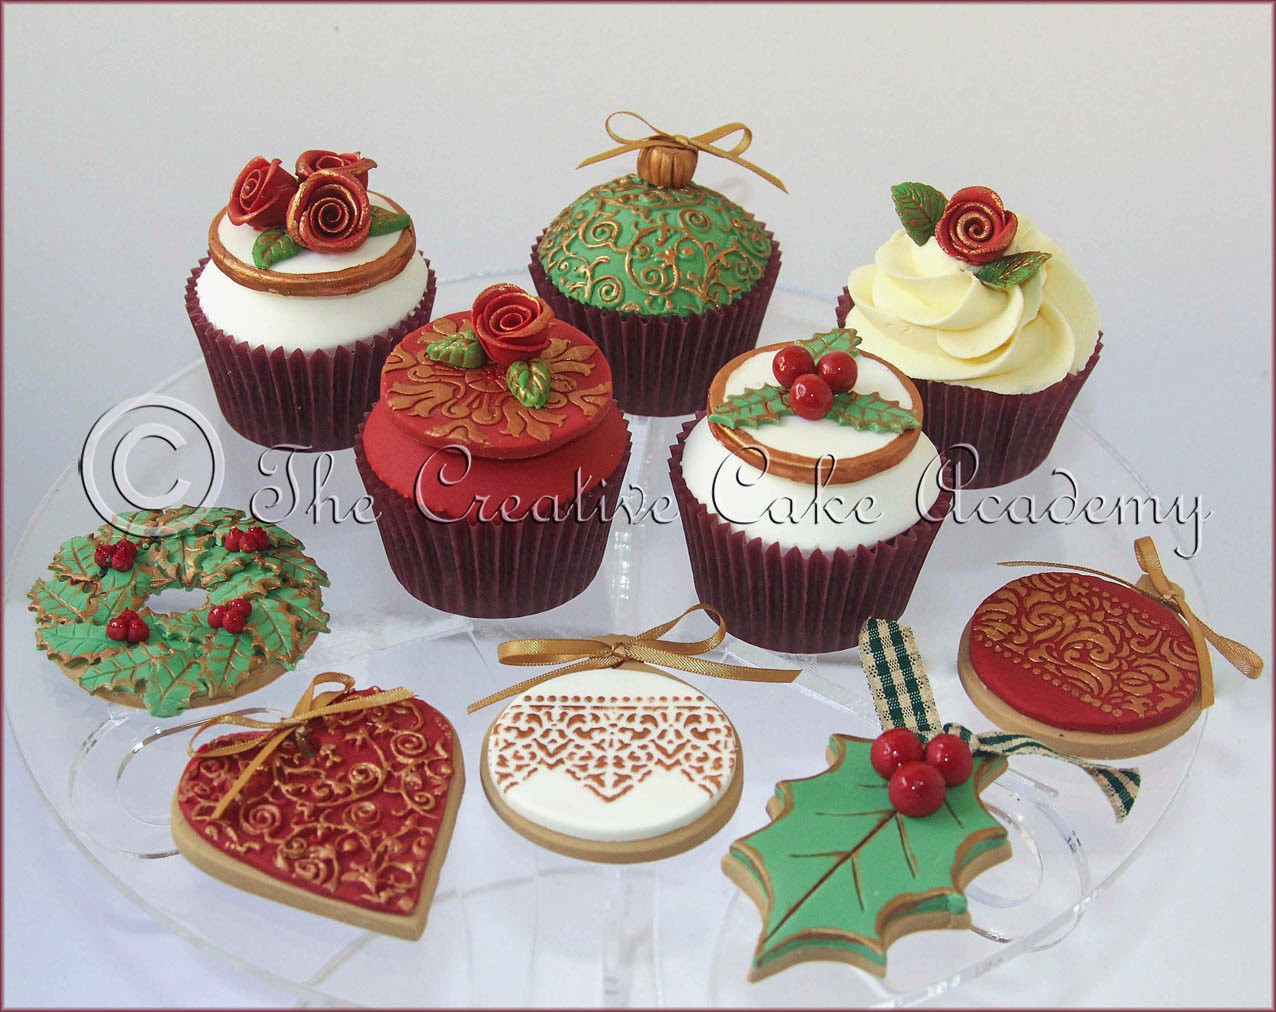 Christmas Cakes And Cupcakes
 The Creative Cake Academy